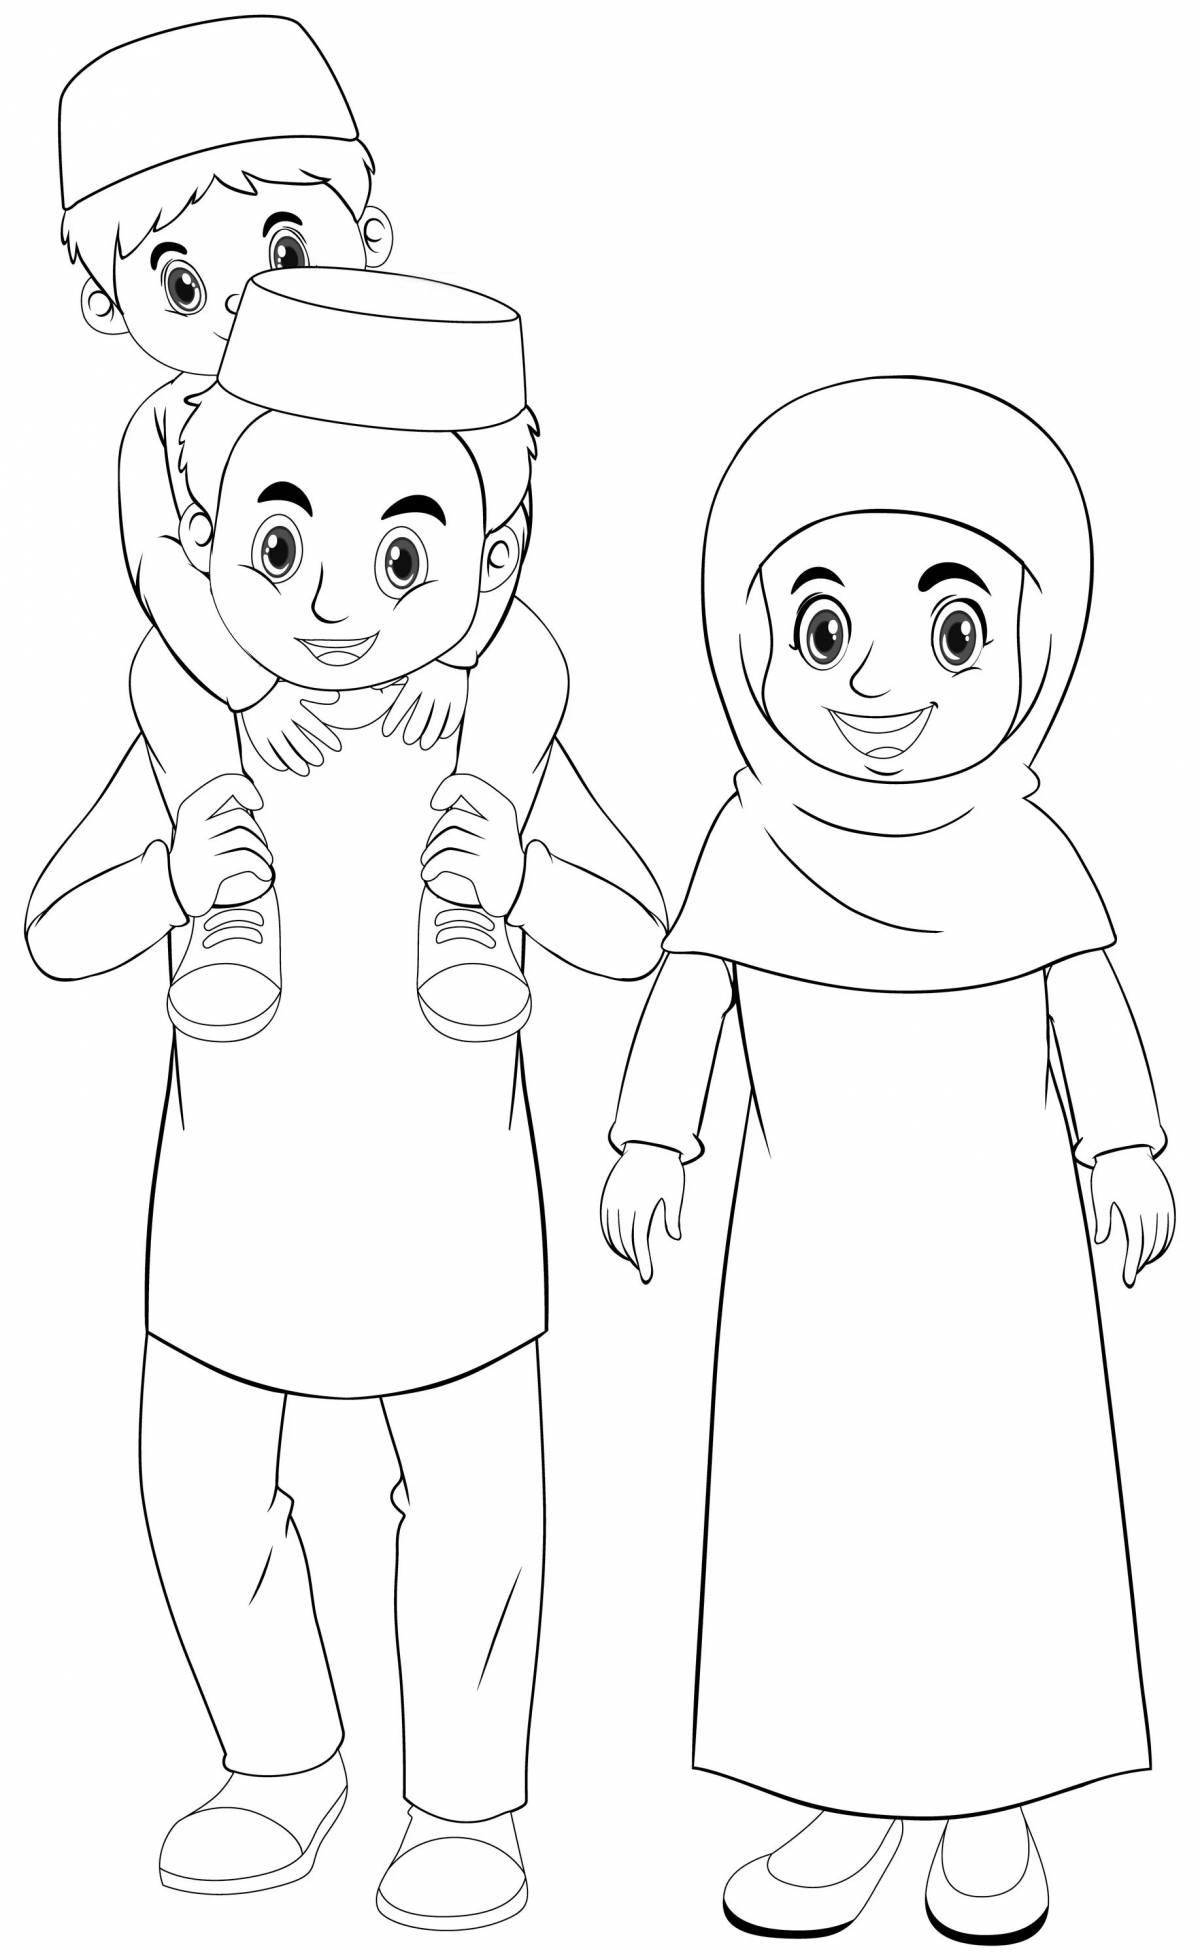 Праздничная мусульманская семейная раскраска